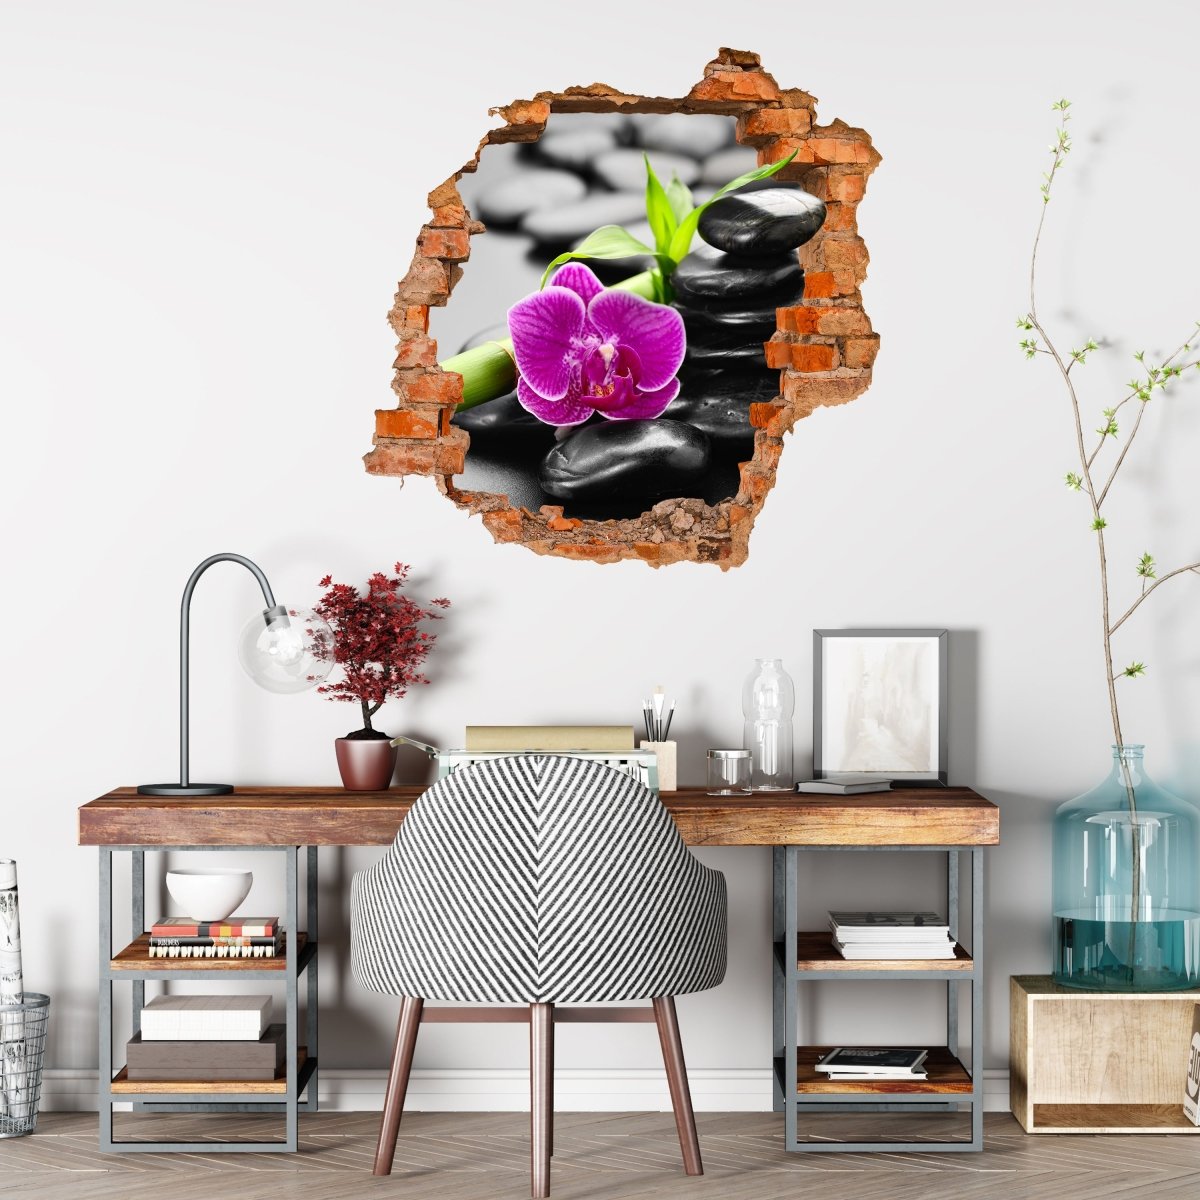 3D wall sticker Zen basalt stones and orchid - Wall decal M0954